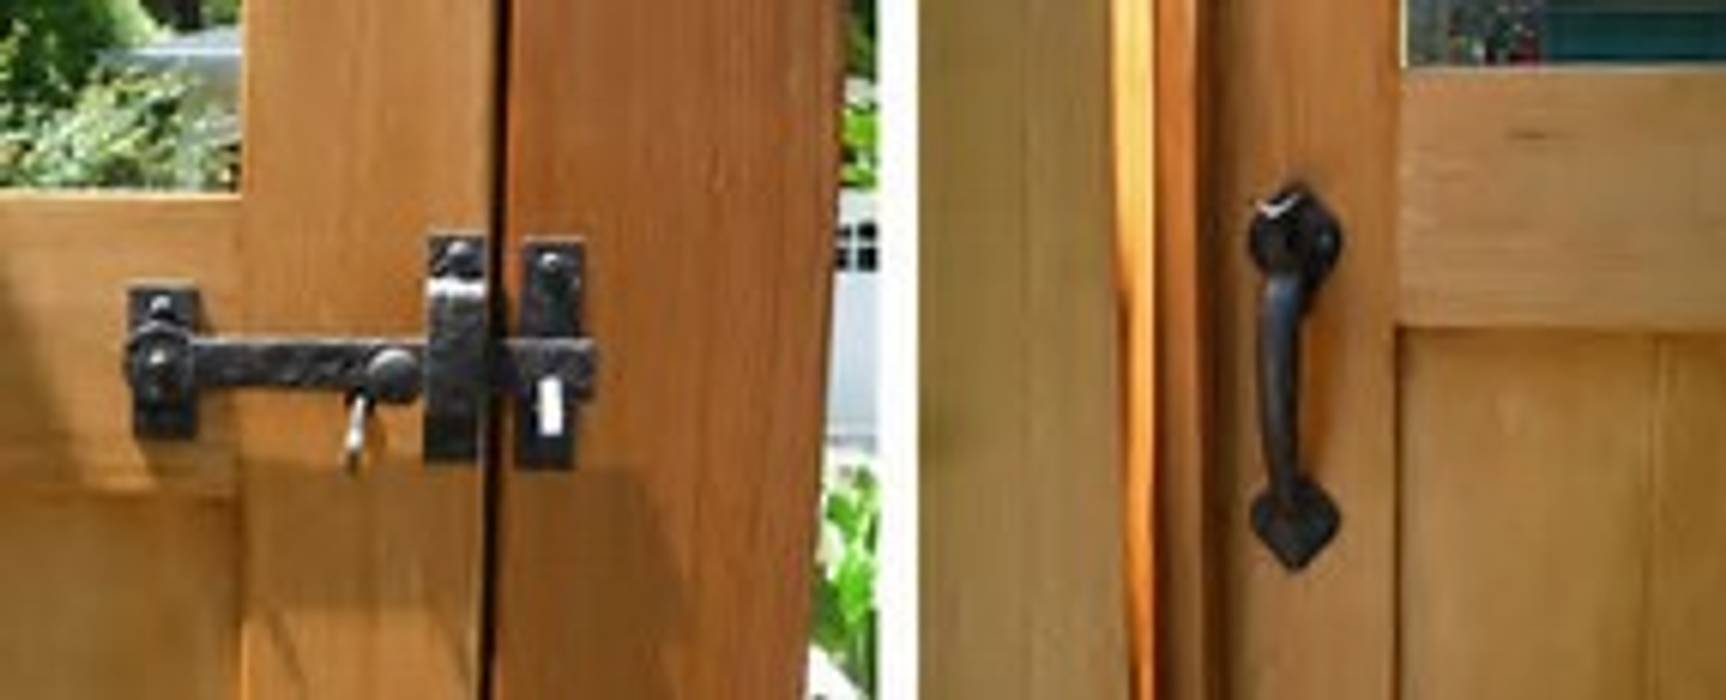 Window lock security upgrade project Locksmith Port Elizabeth Security upgrade,master locksmith